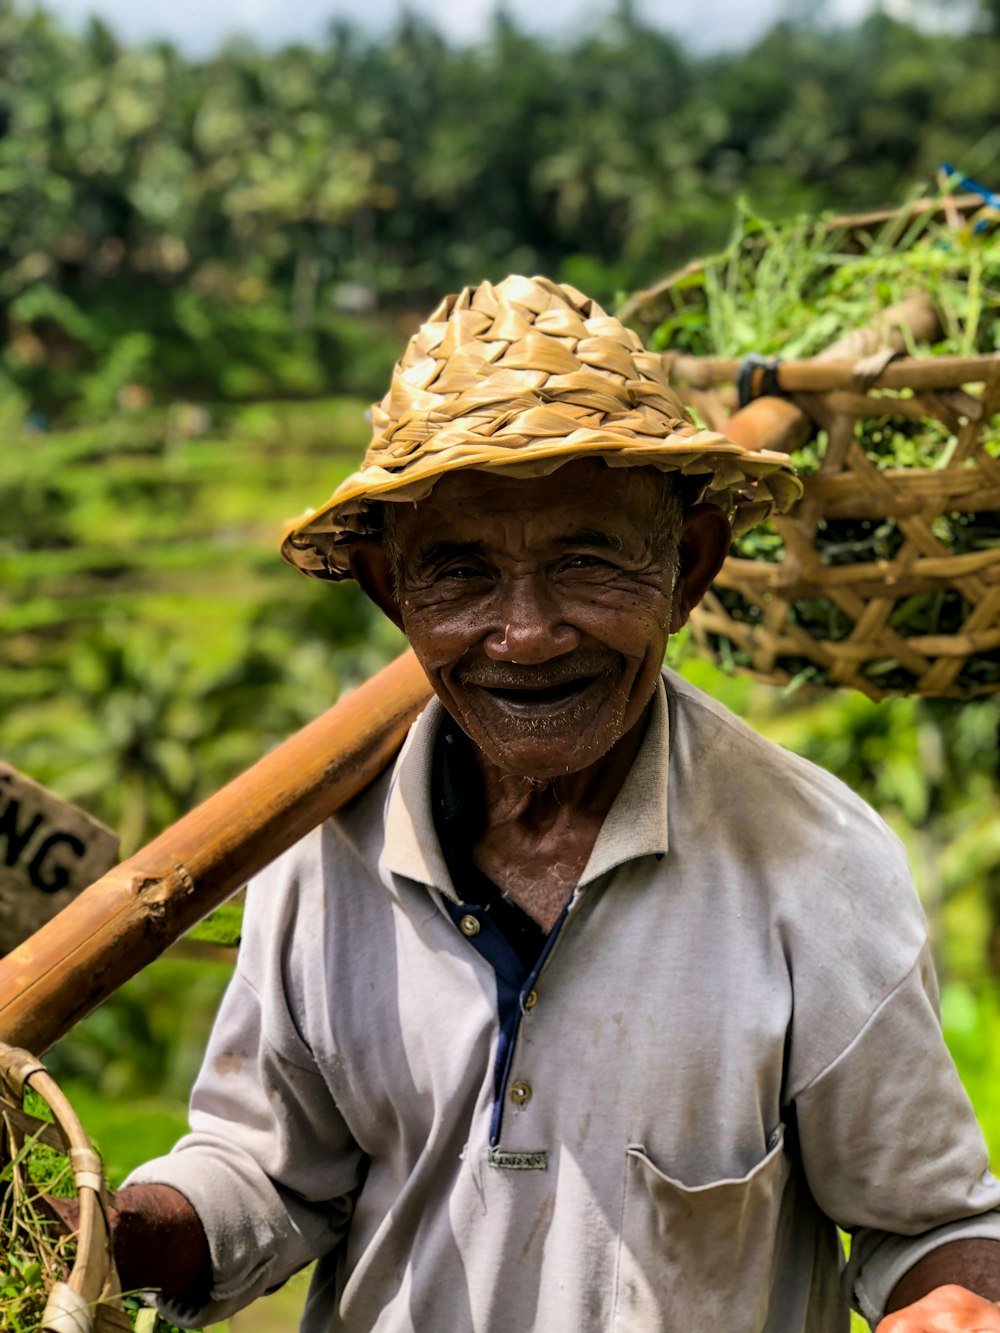 Farmer Portrait Pictures | Download Free Images on Unsplash